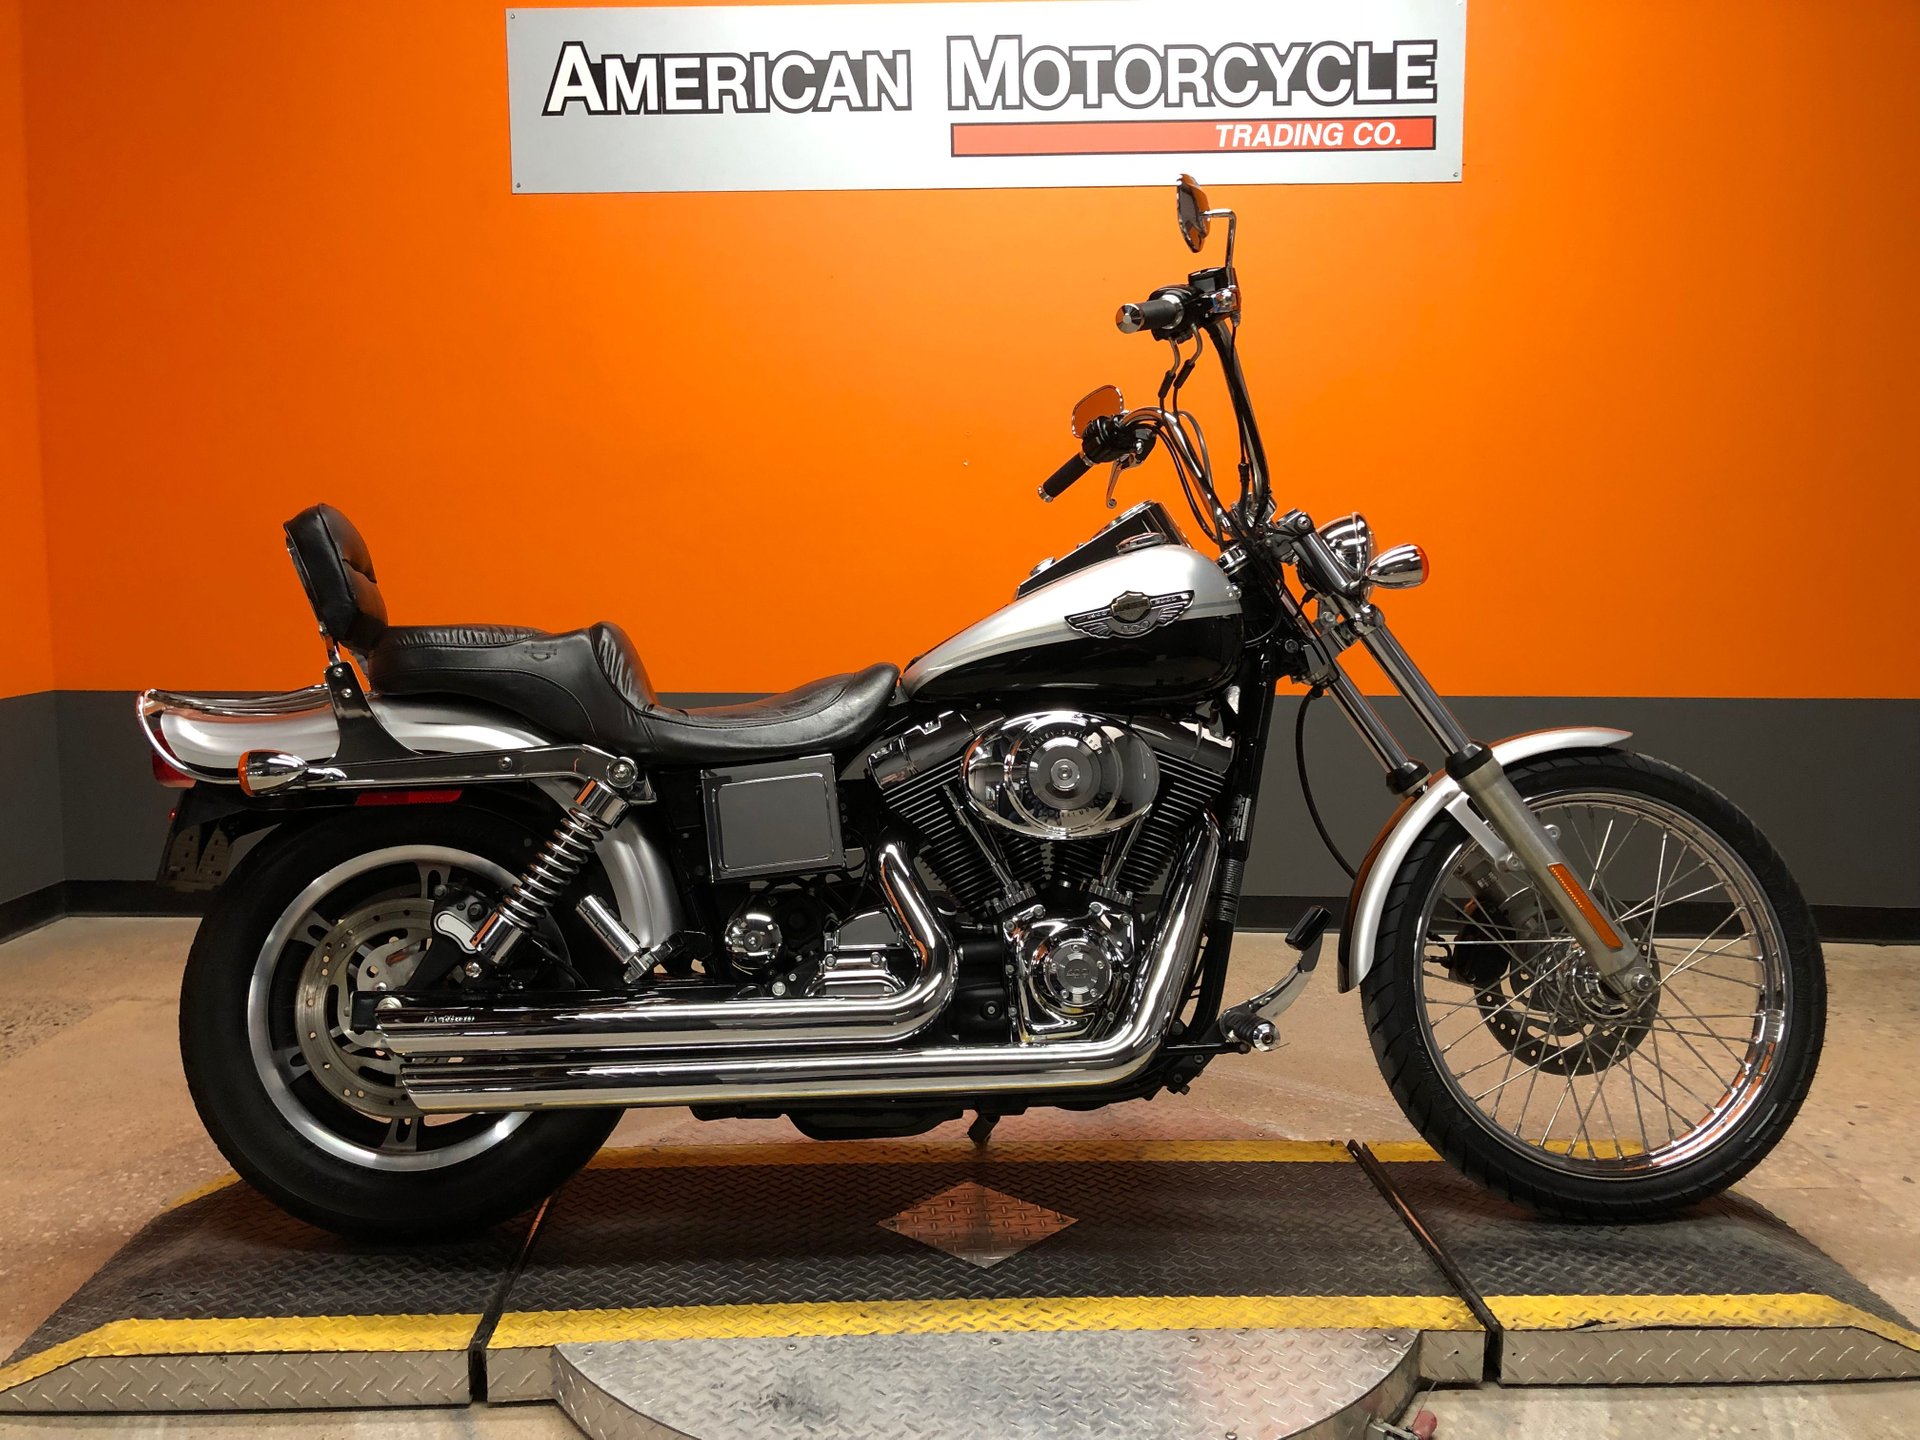 2003 Harley Davidson Dyna Wide Glide American Motorcycle Trading Company Used Harley Davidson Motorcycles